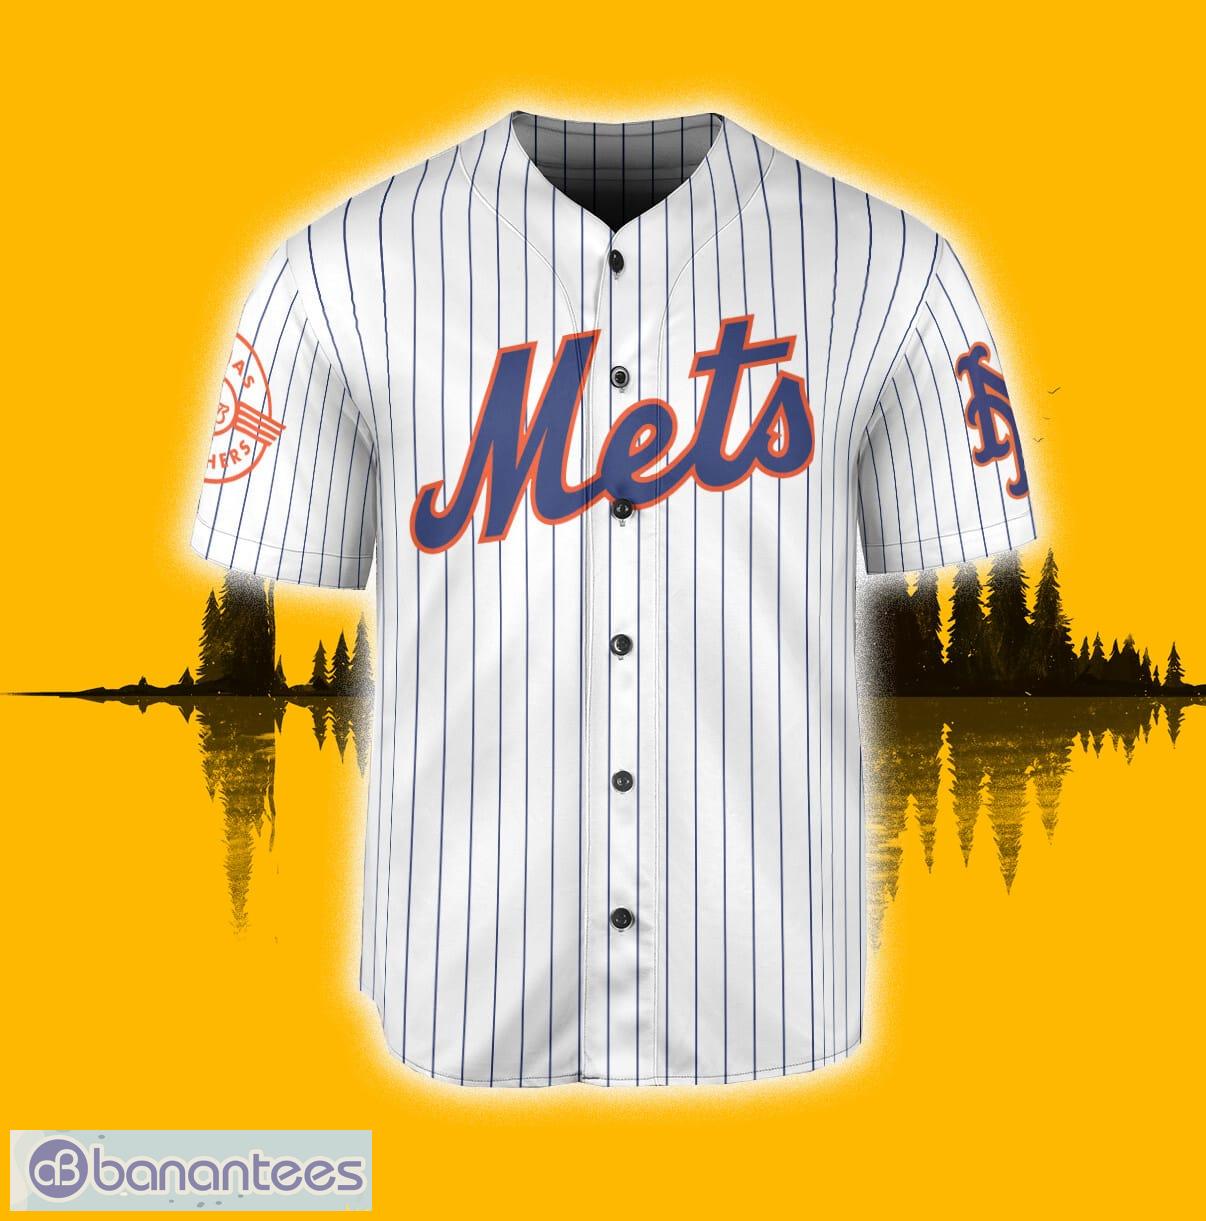 New York Mets Baseball 2023 Shirt - Banantees